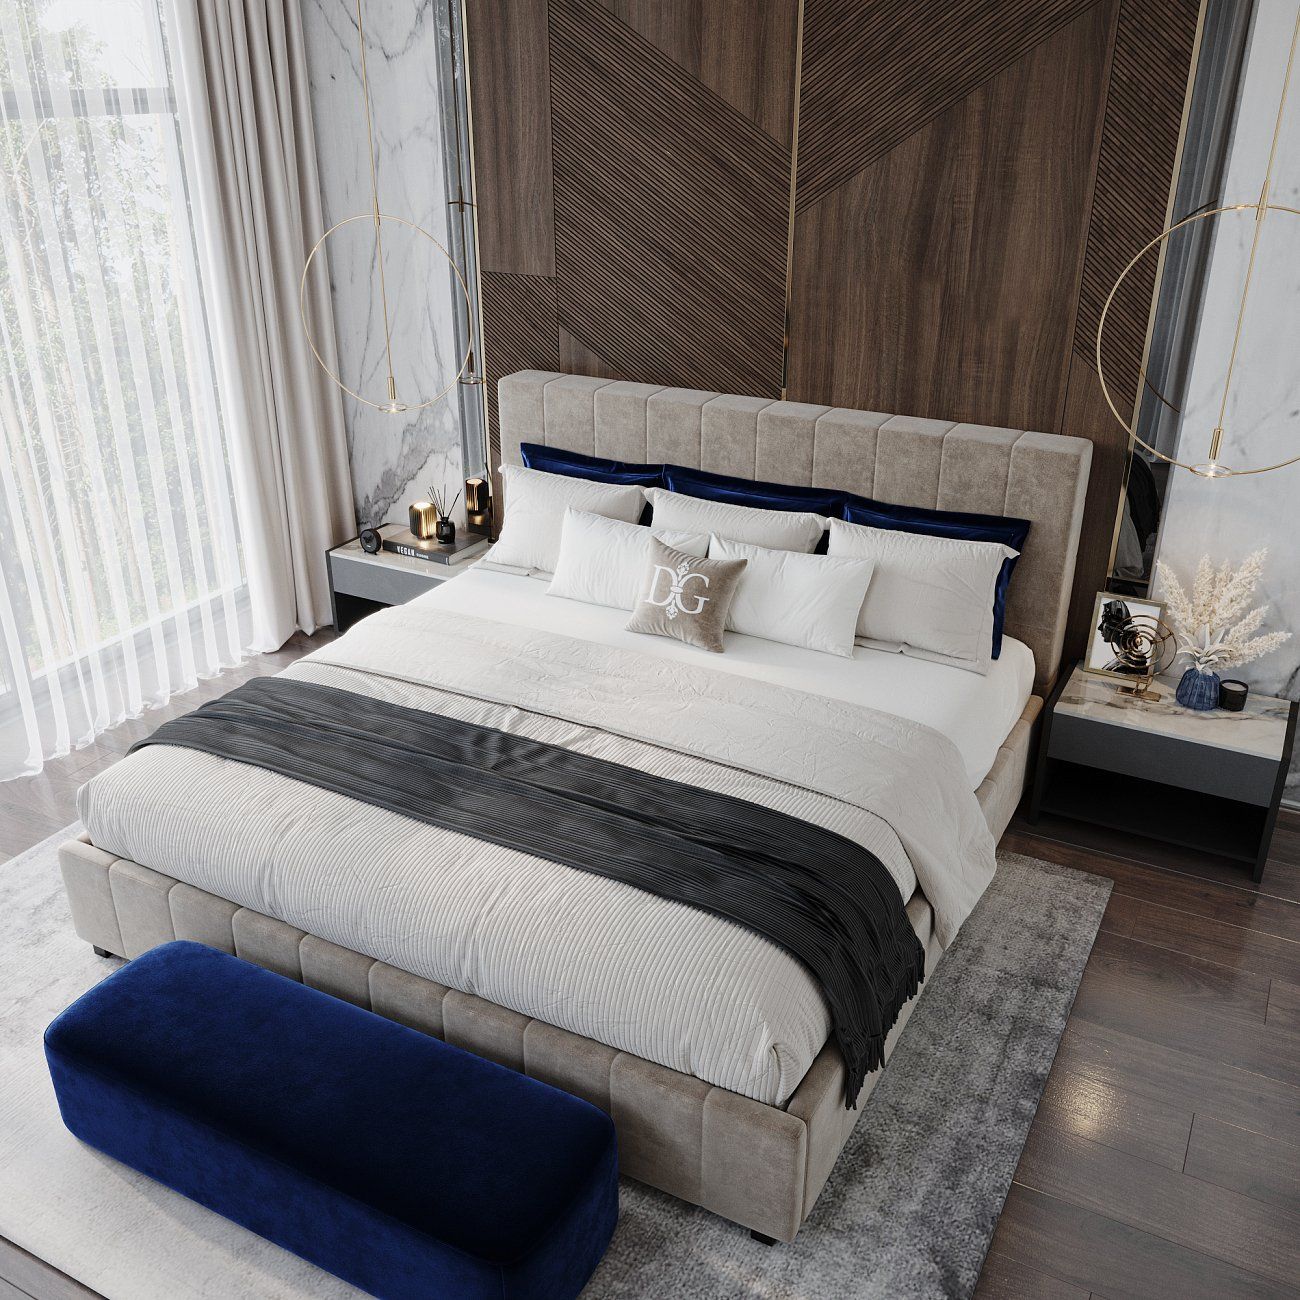 Кровать евро 200х200 см коричневая Shining Modern